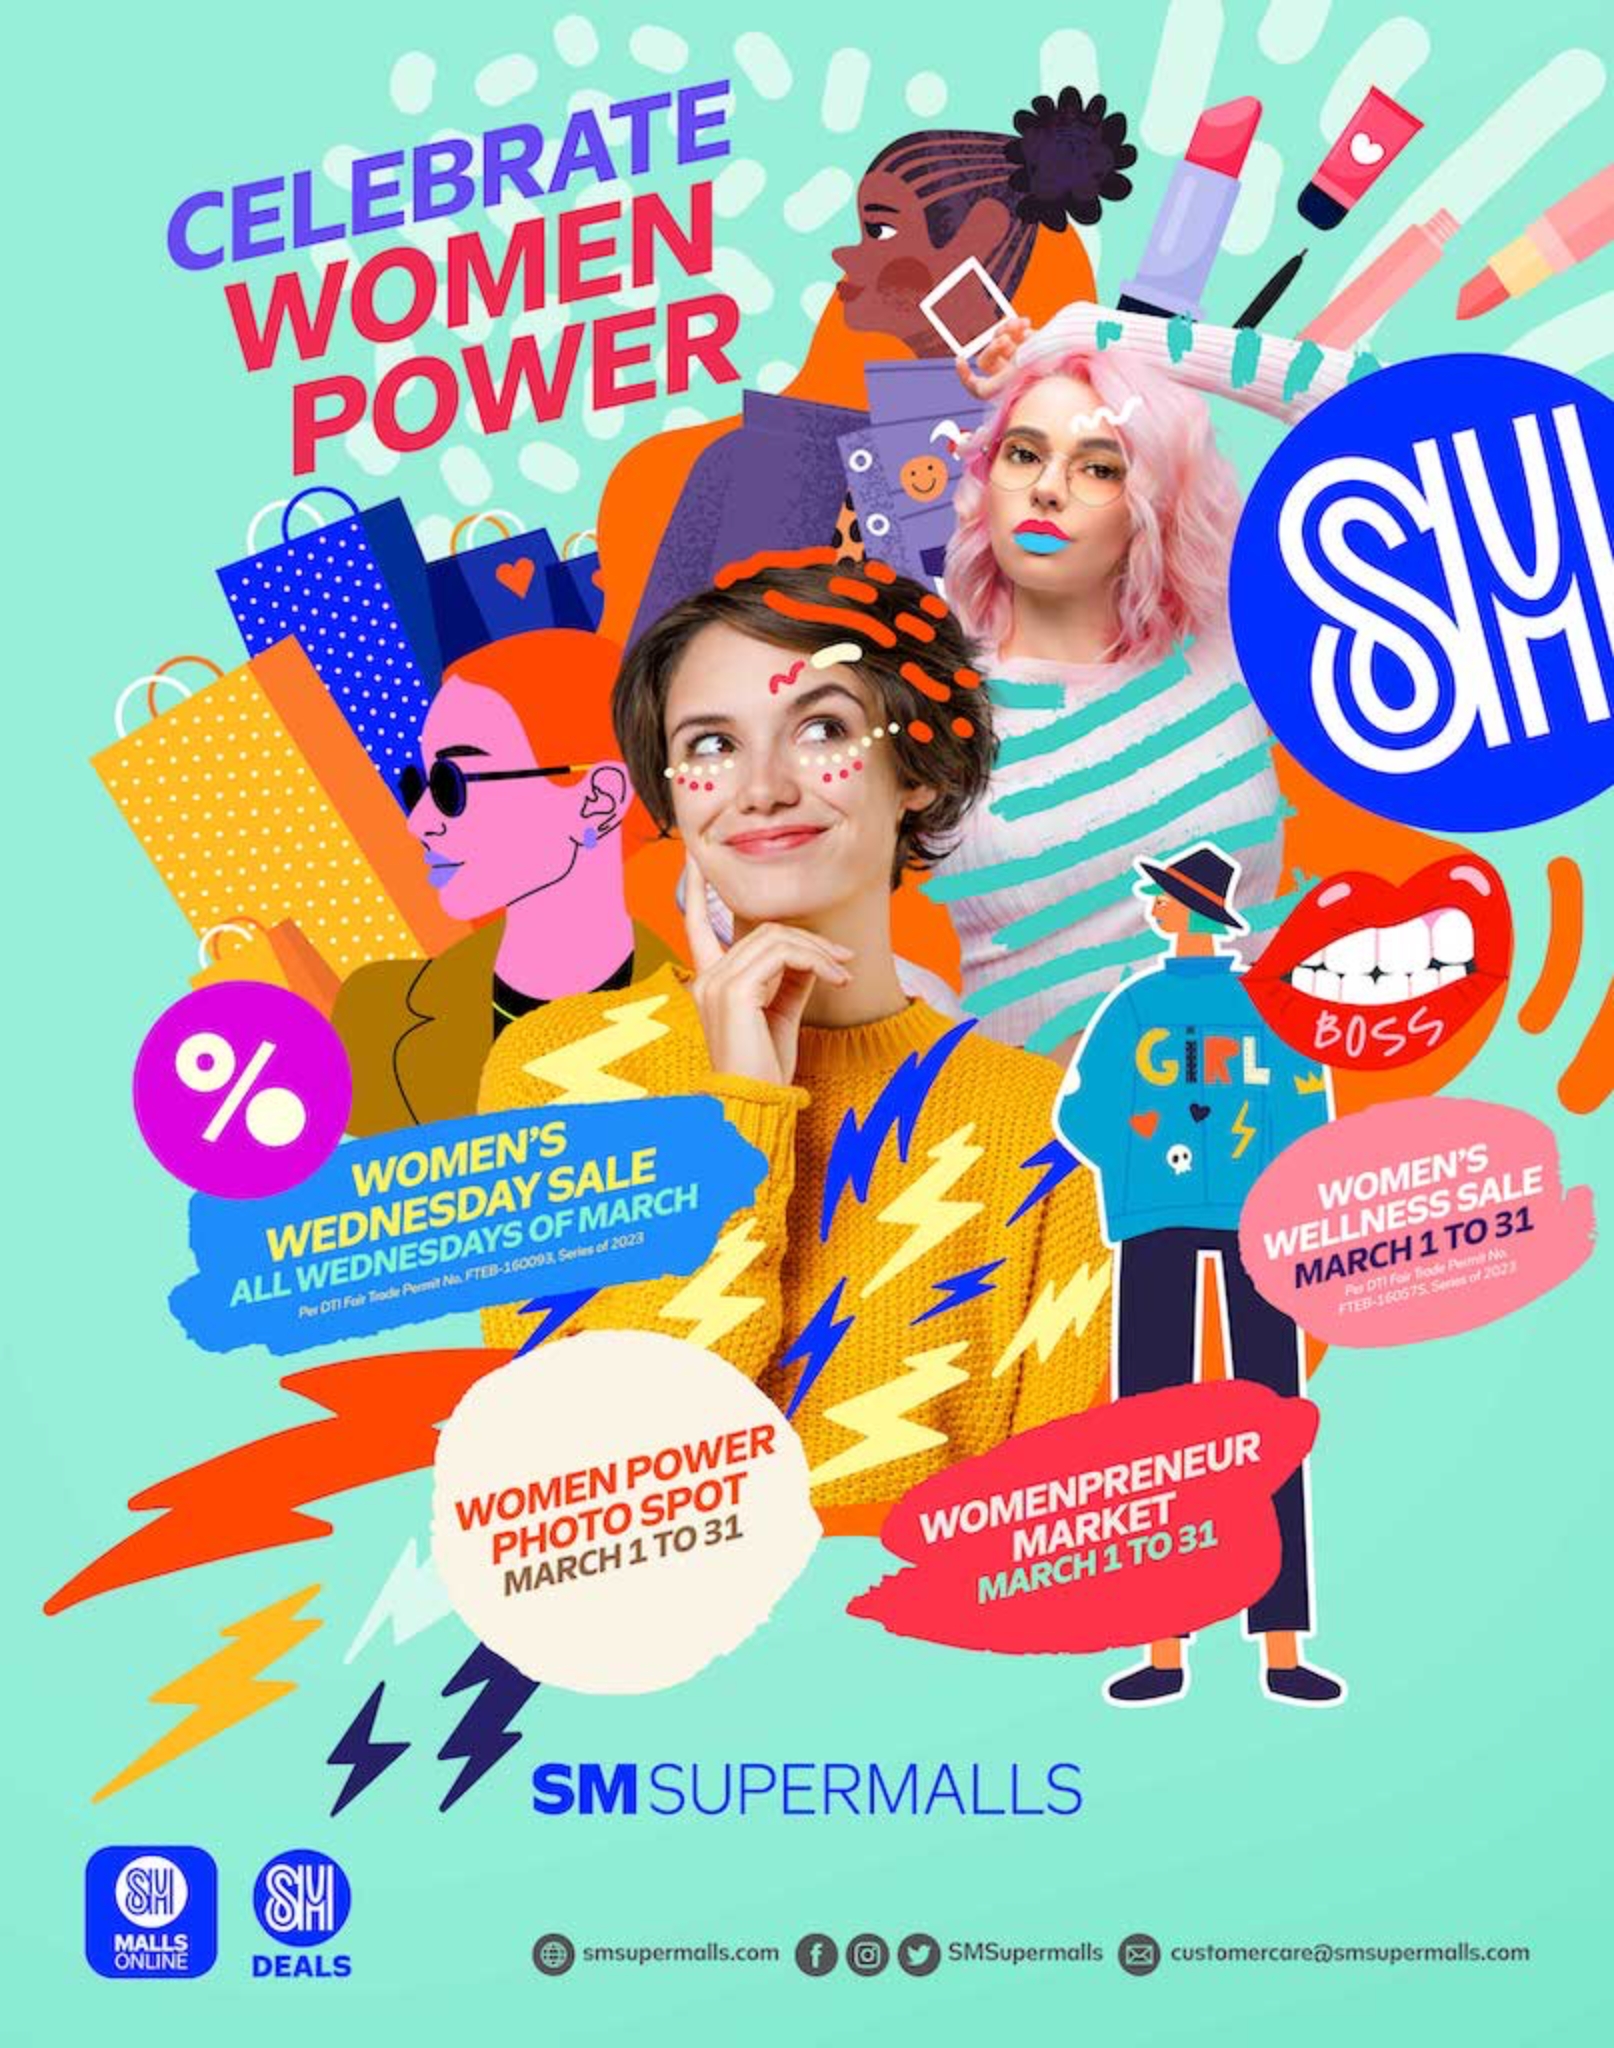 Be bolder, braver, and more confident at SM Supermalls’ Women’s Month celebration!